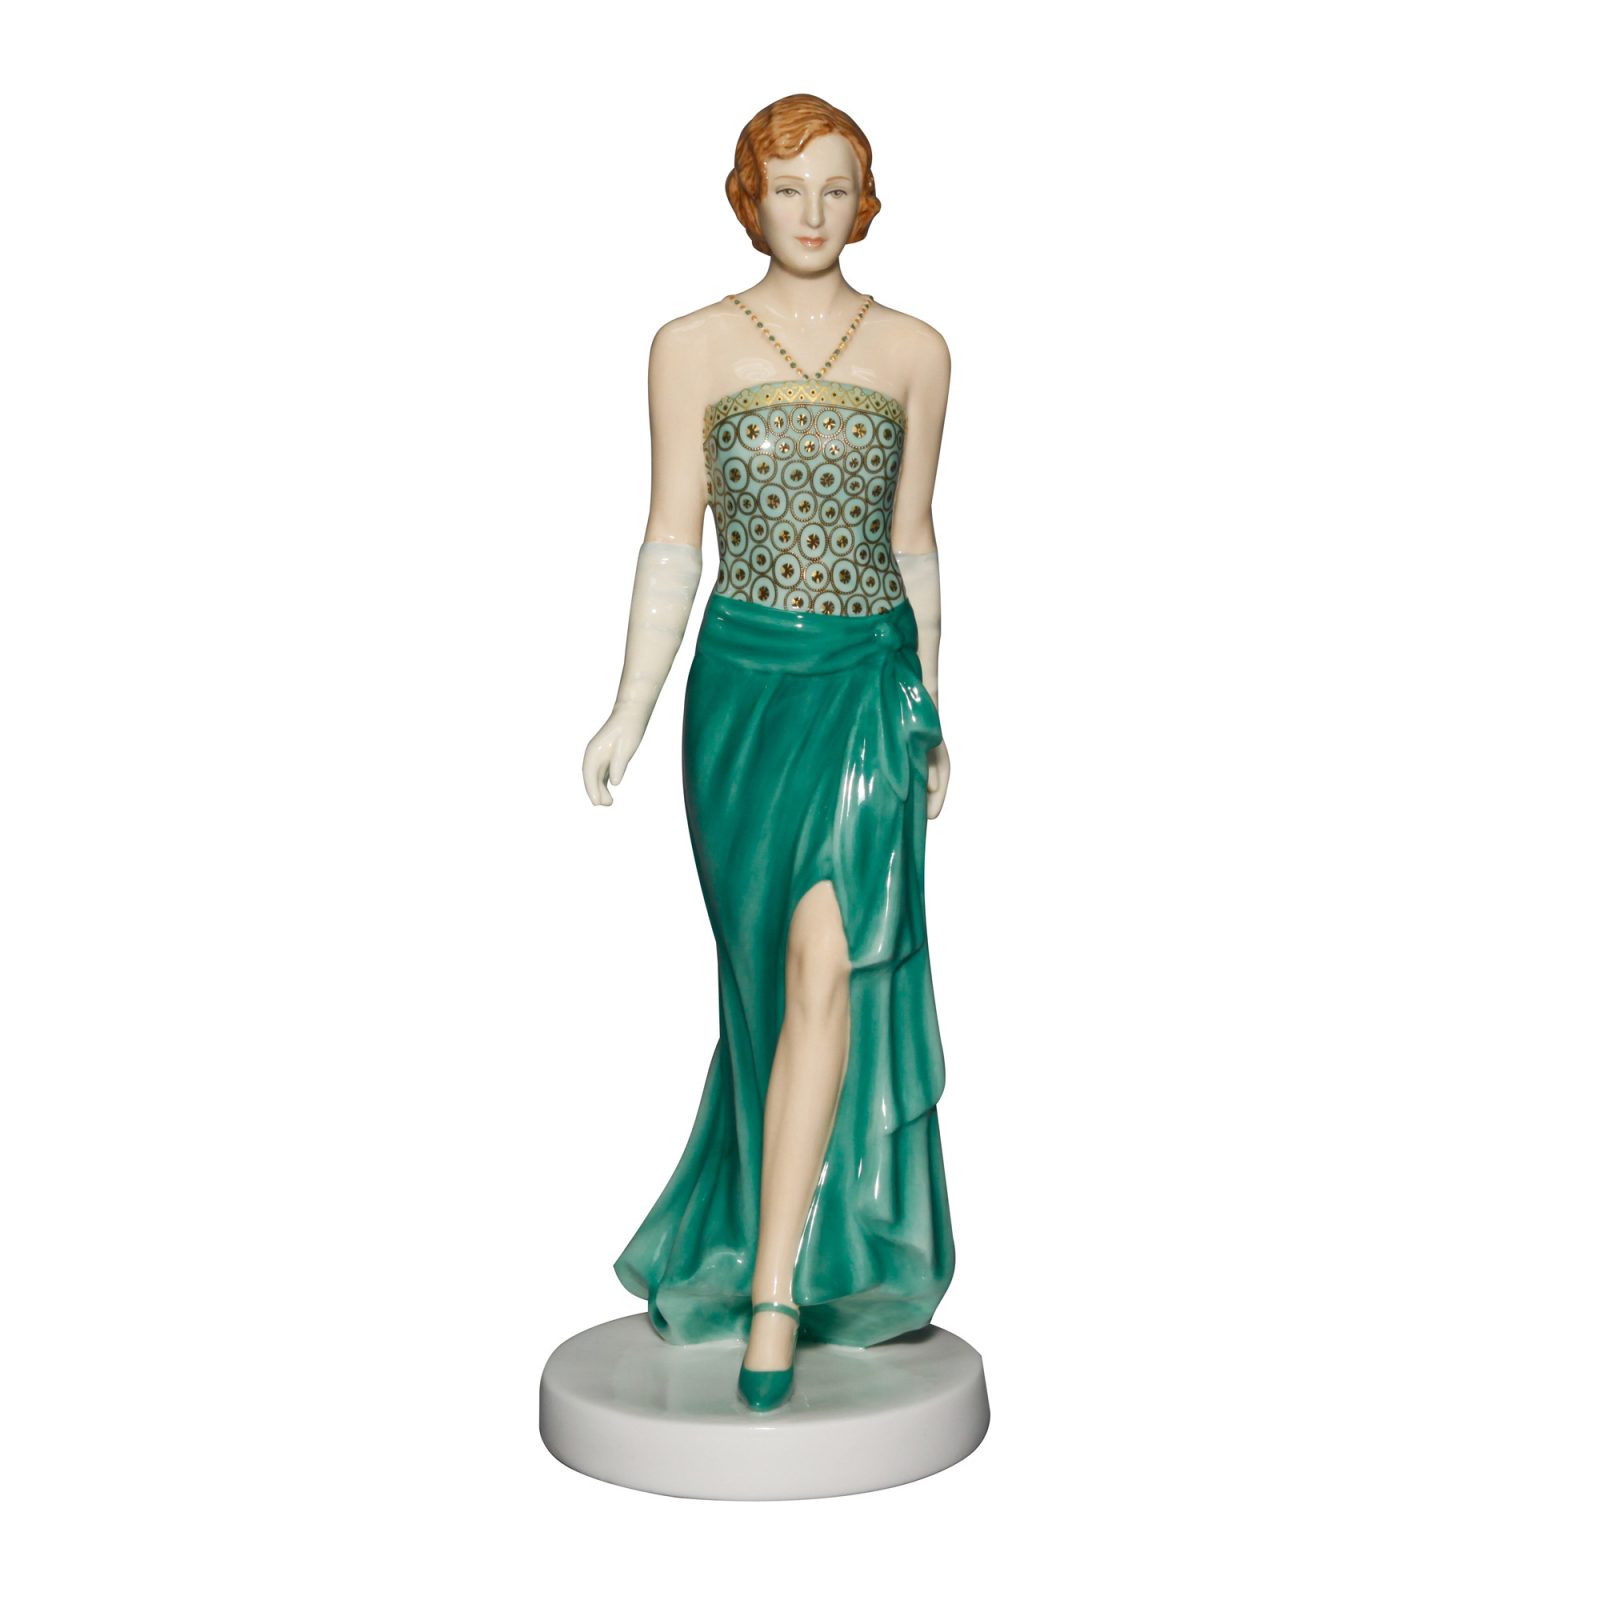 Lady Edith HN5840 - Downton Abbey - Royal Doulton Figurine